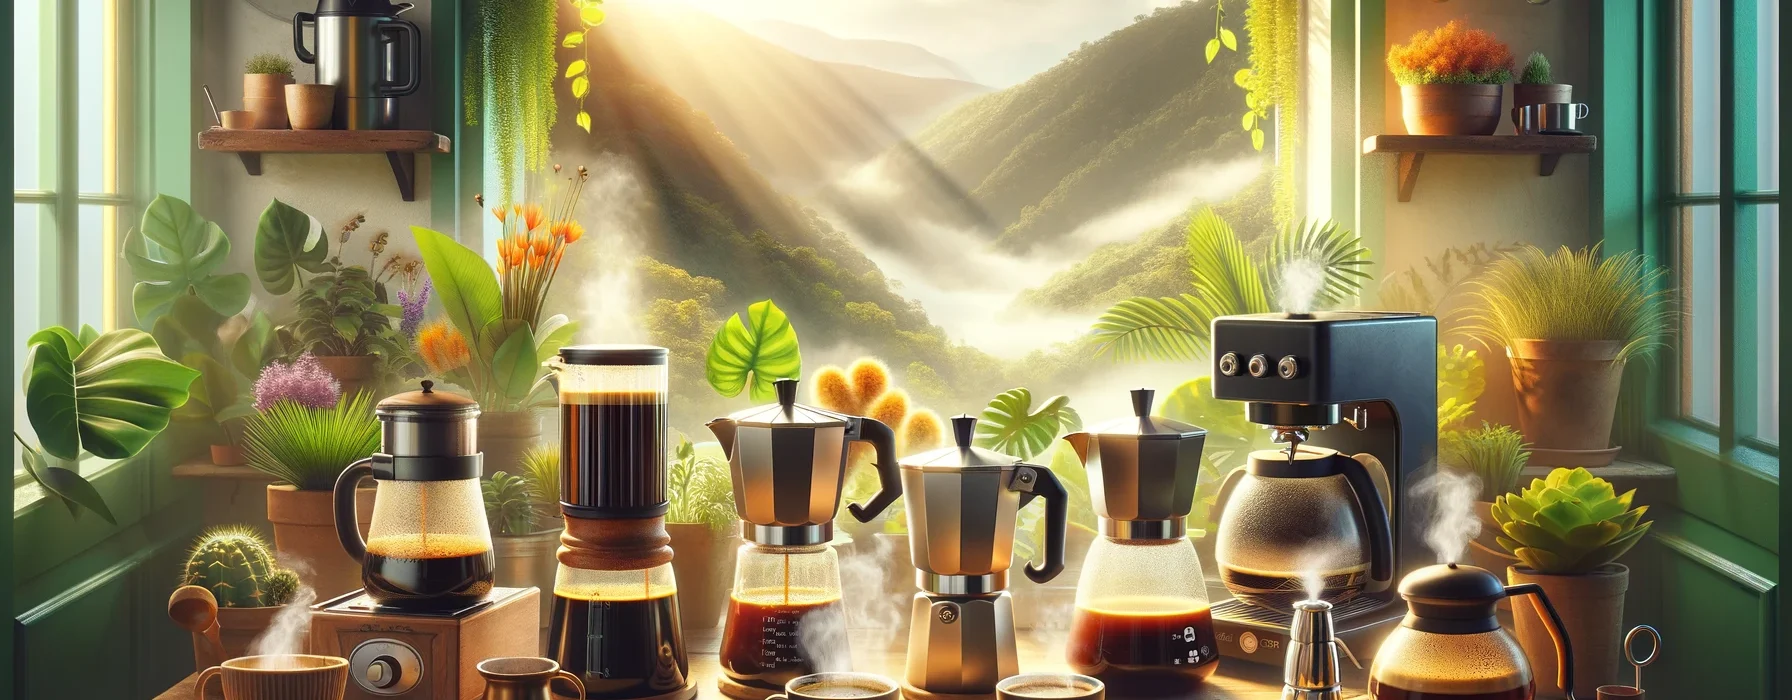 Types of Coffee Brewing Methods ECoffeeFinder.com